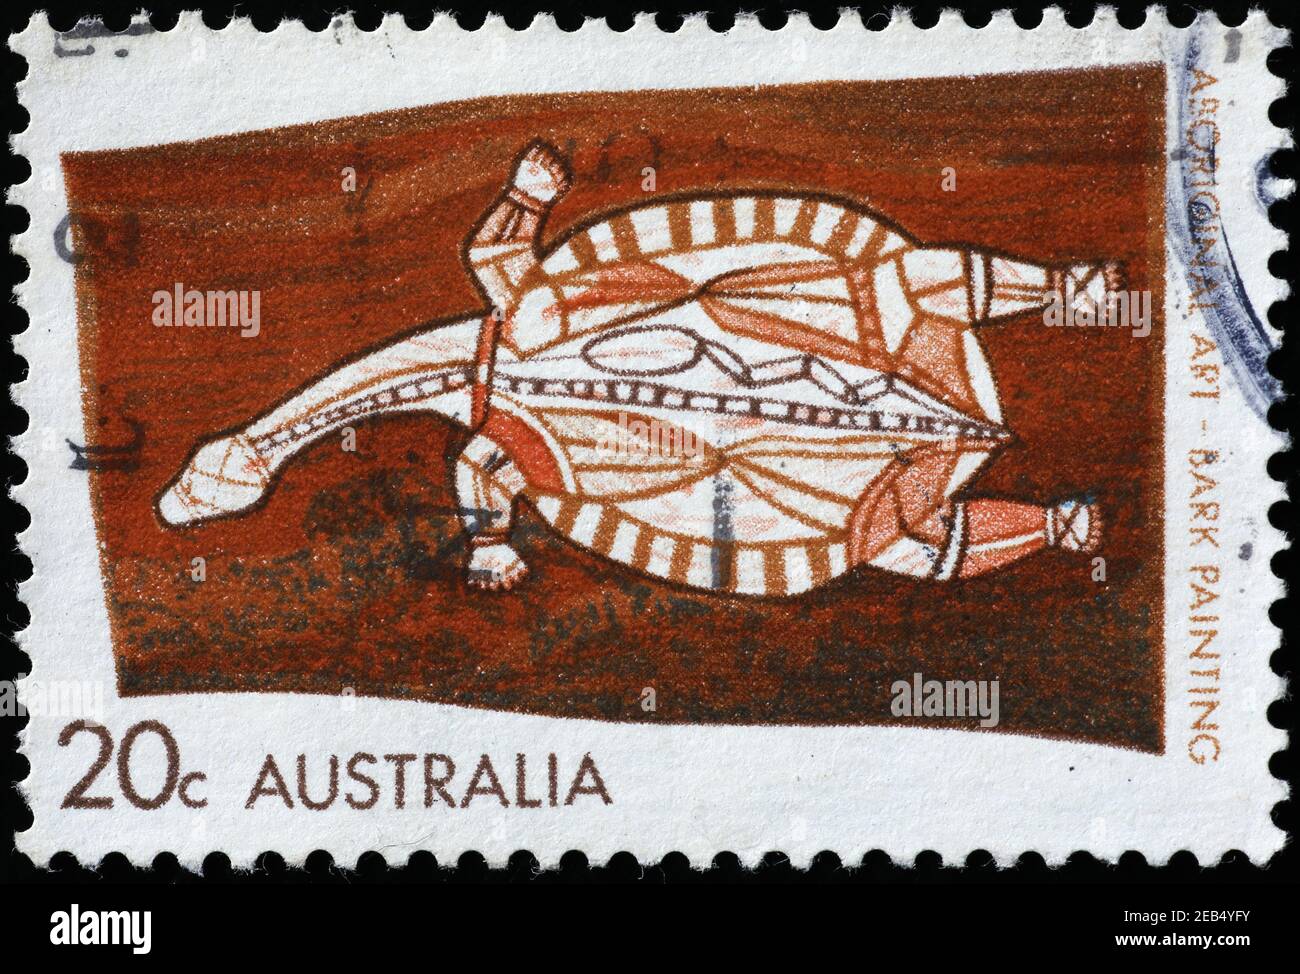 Aboriginal bark painting of a turtle on australian stamp Stock Photo